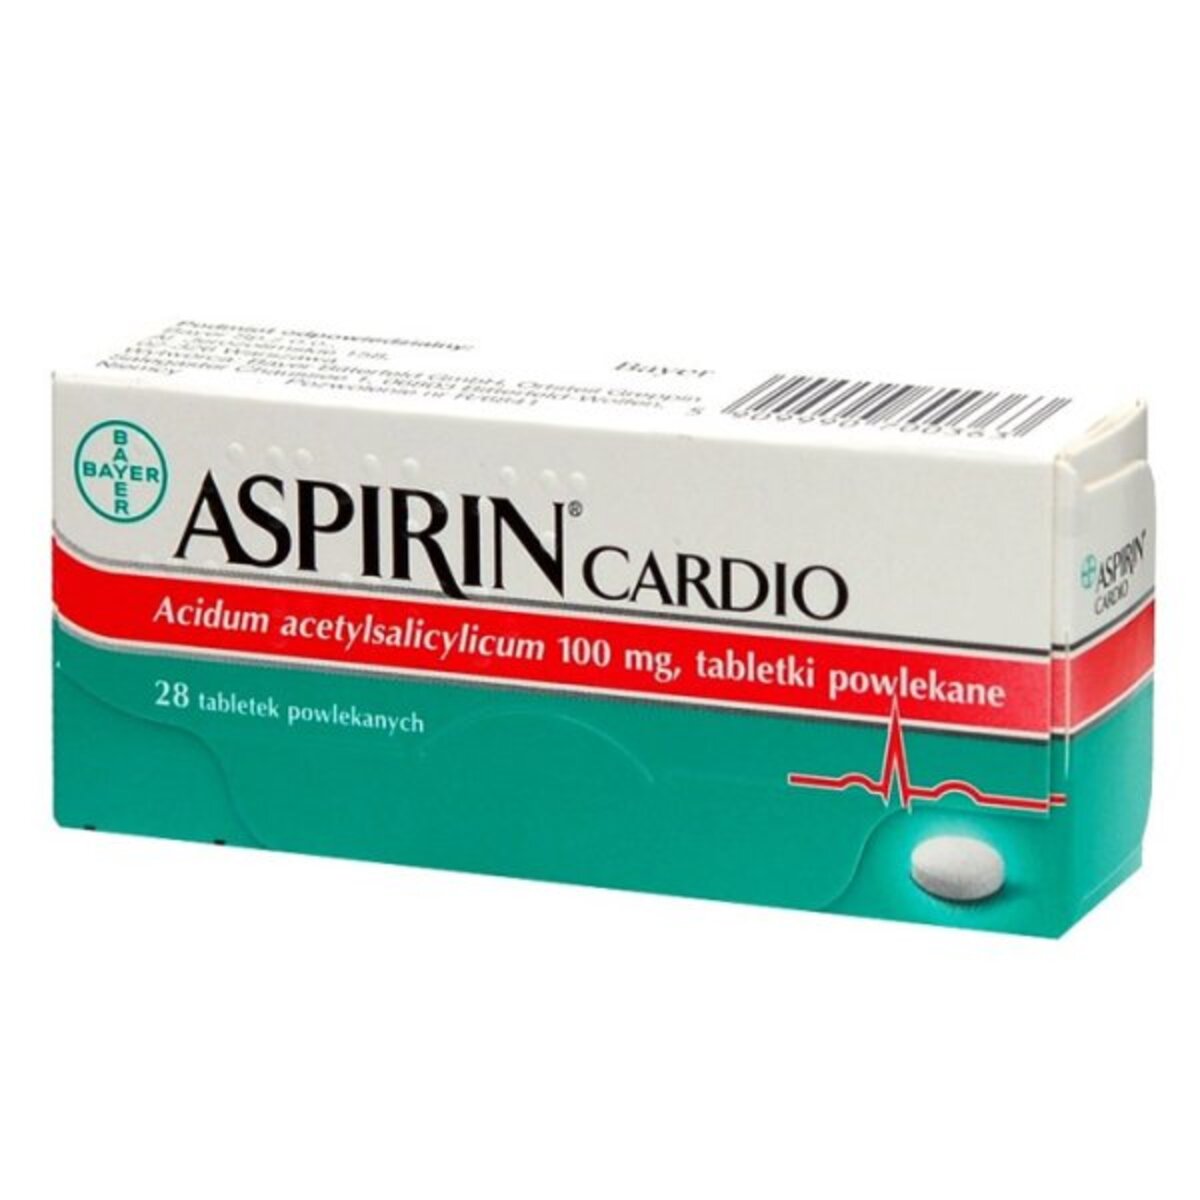 Aspirin Cardio 100mg Tablets, 30 Tablets - Asset Pharmacy